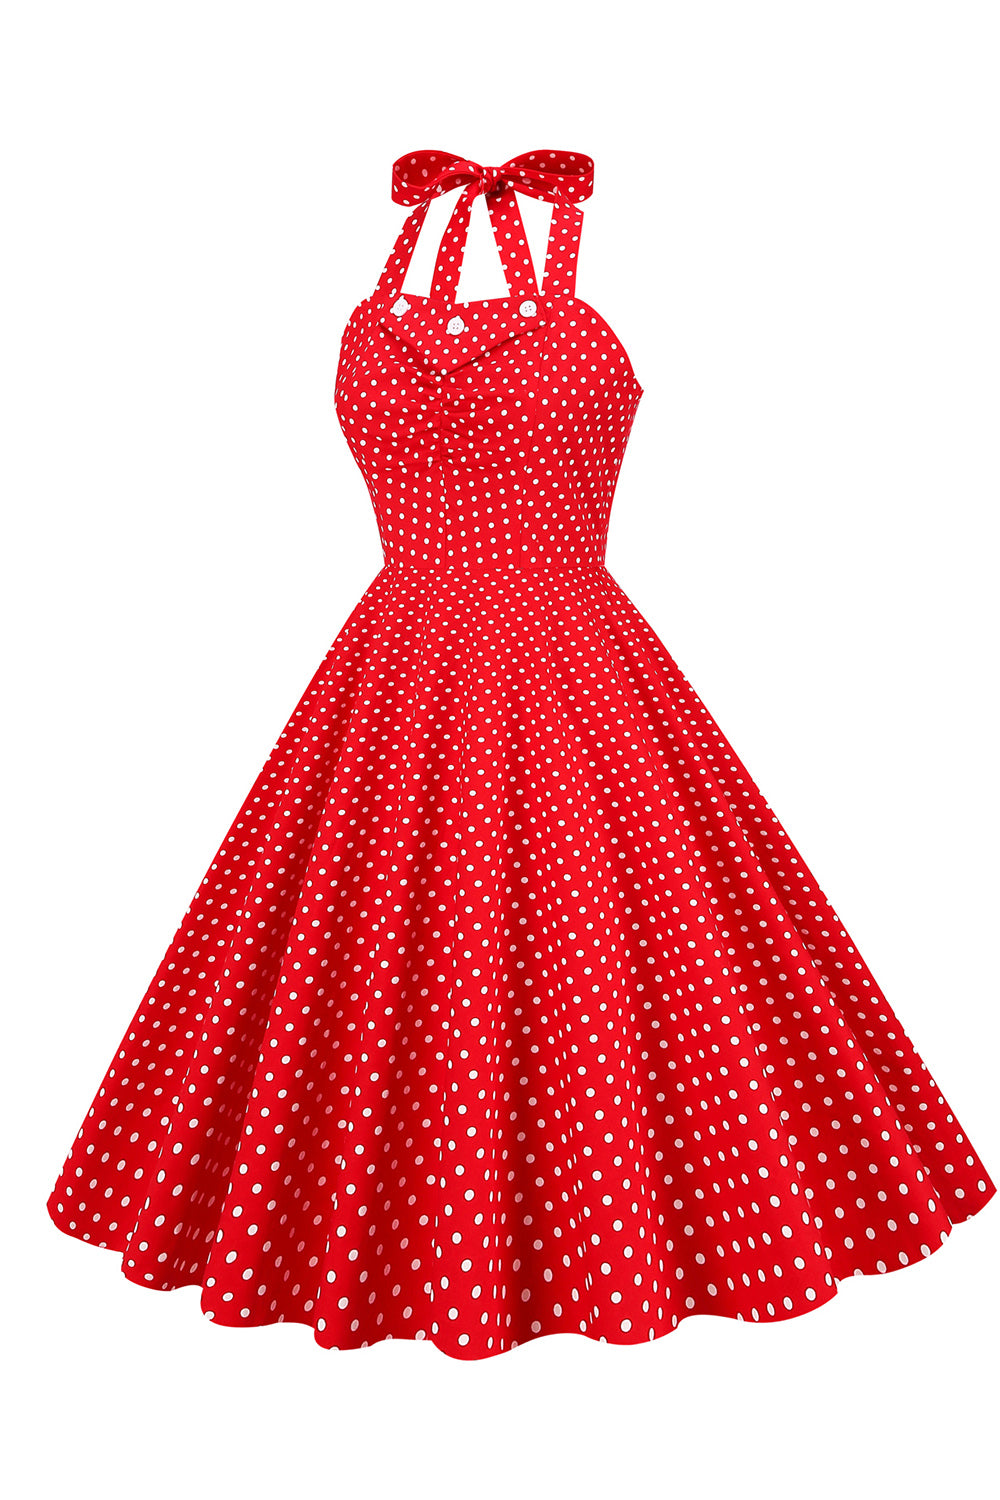 Zapaka Women Red Polka Dots 1950s Dress Retro Style Halter Vintage ...